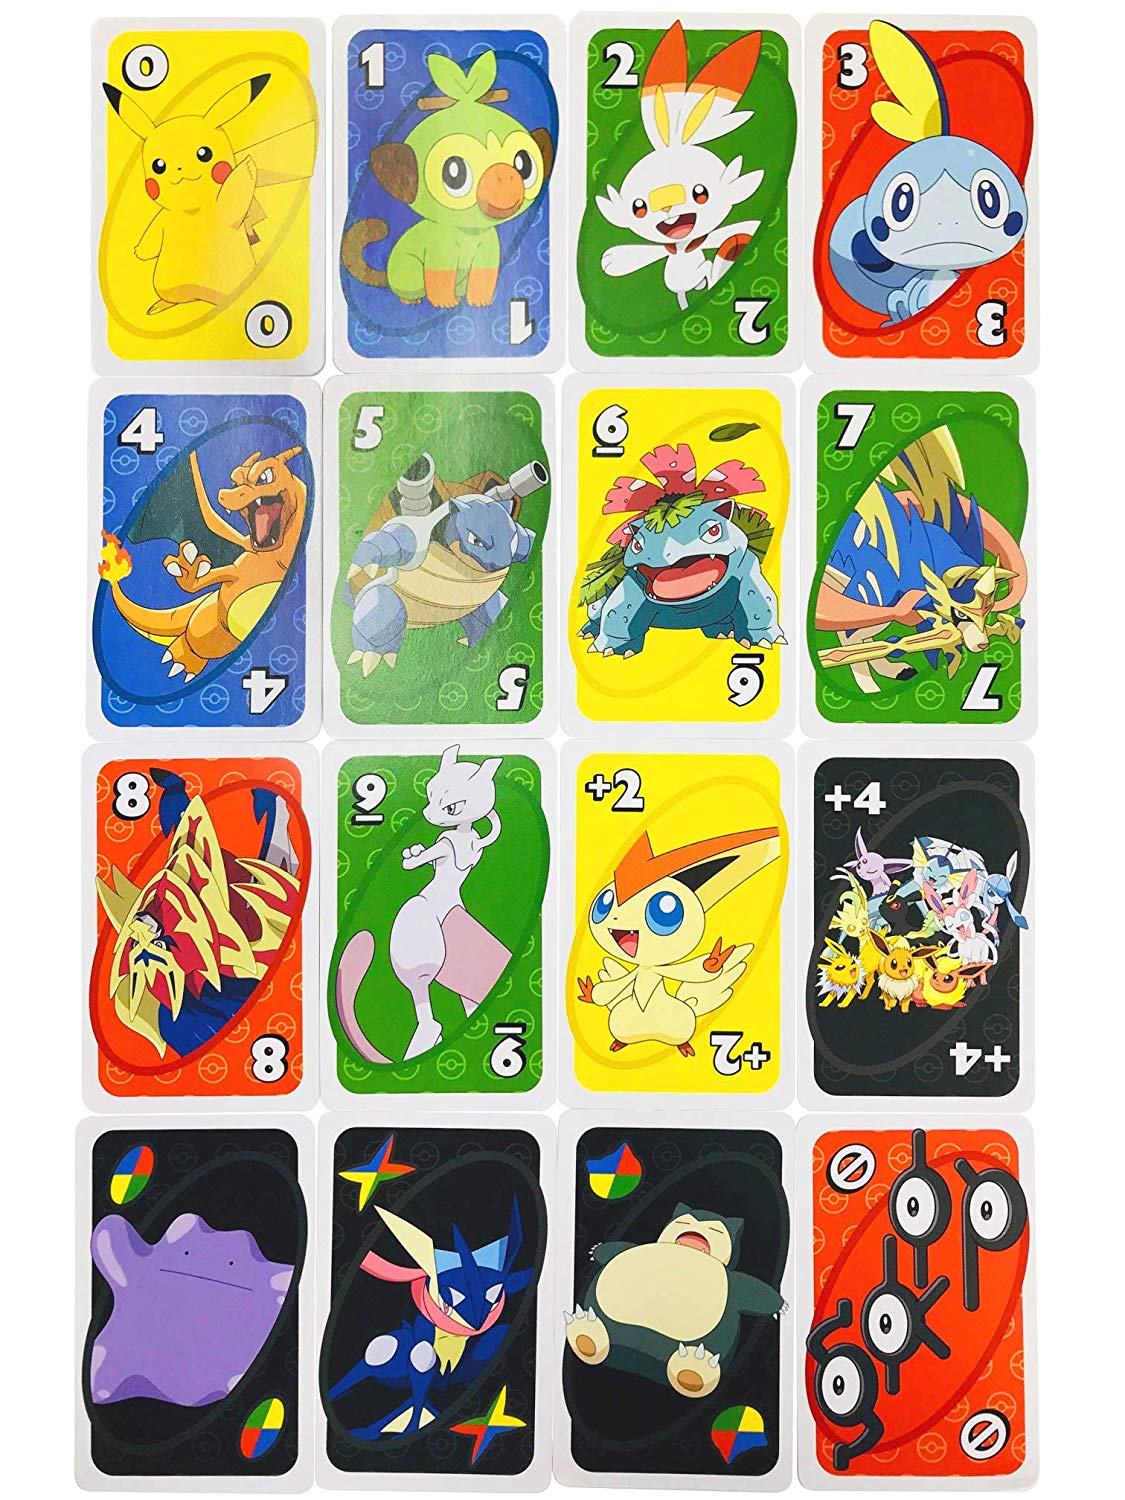 Ecco le speciali carte UNO a tema Pokémon distribuite da Mattel - Pokémon  Millennium